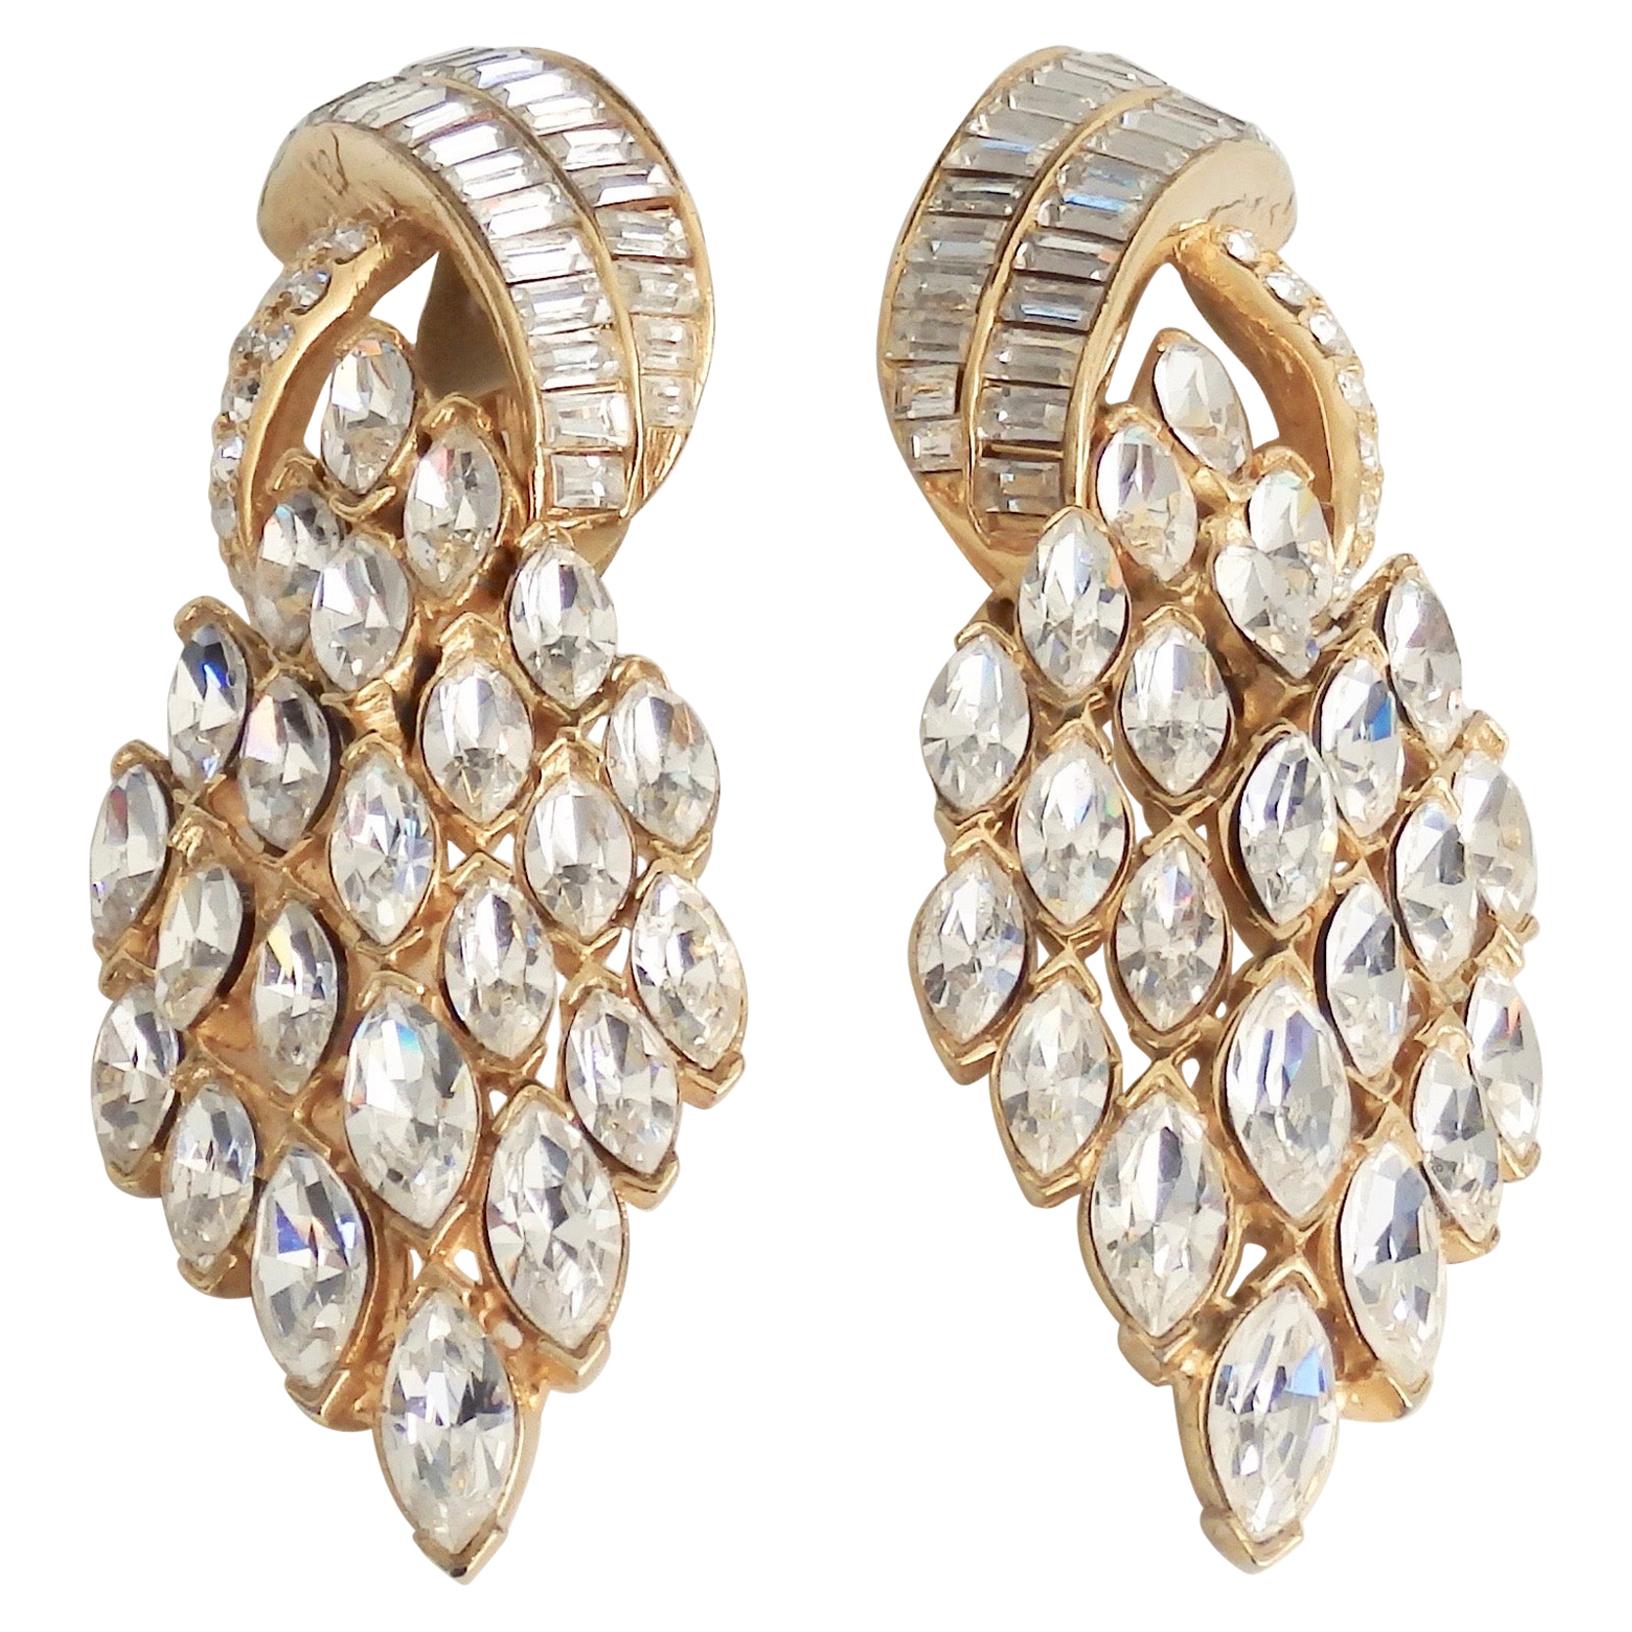 Ciner Art Deco Style Swarovski Crystal Statement Earrings